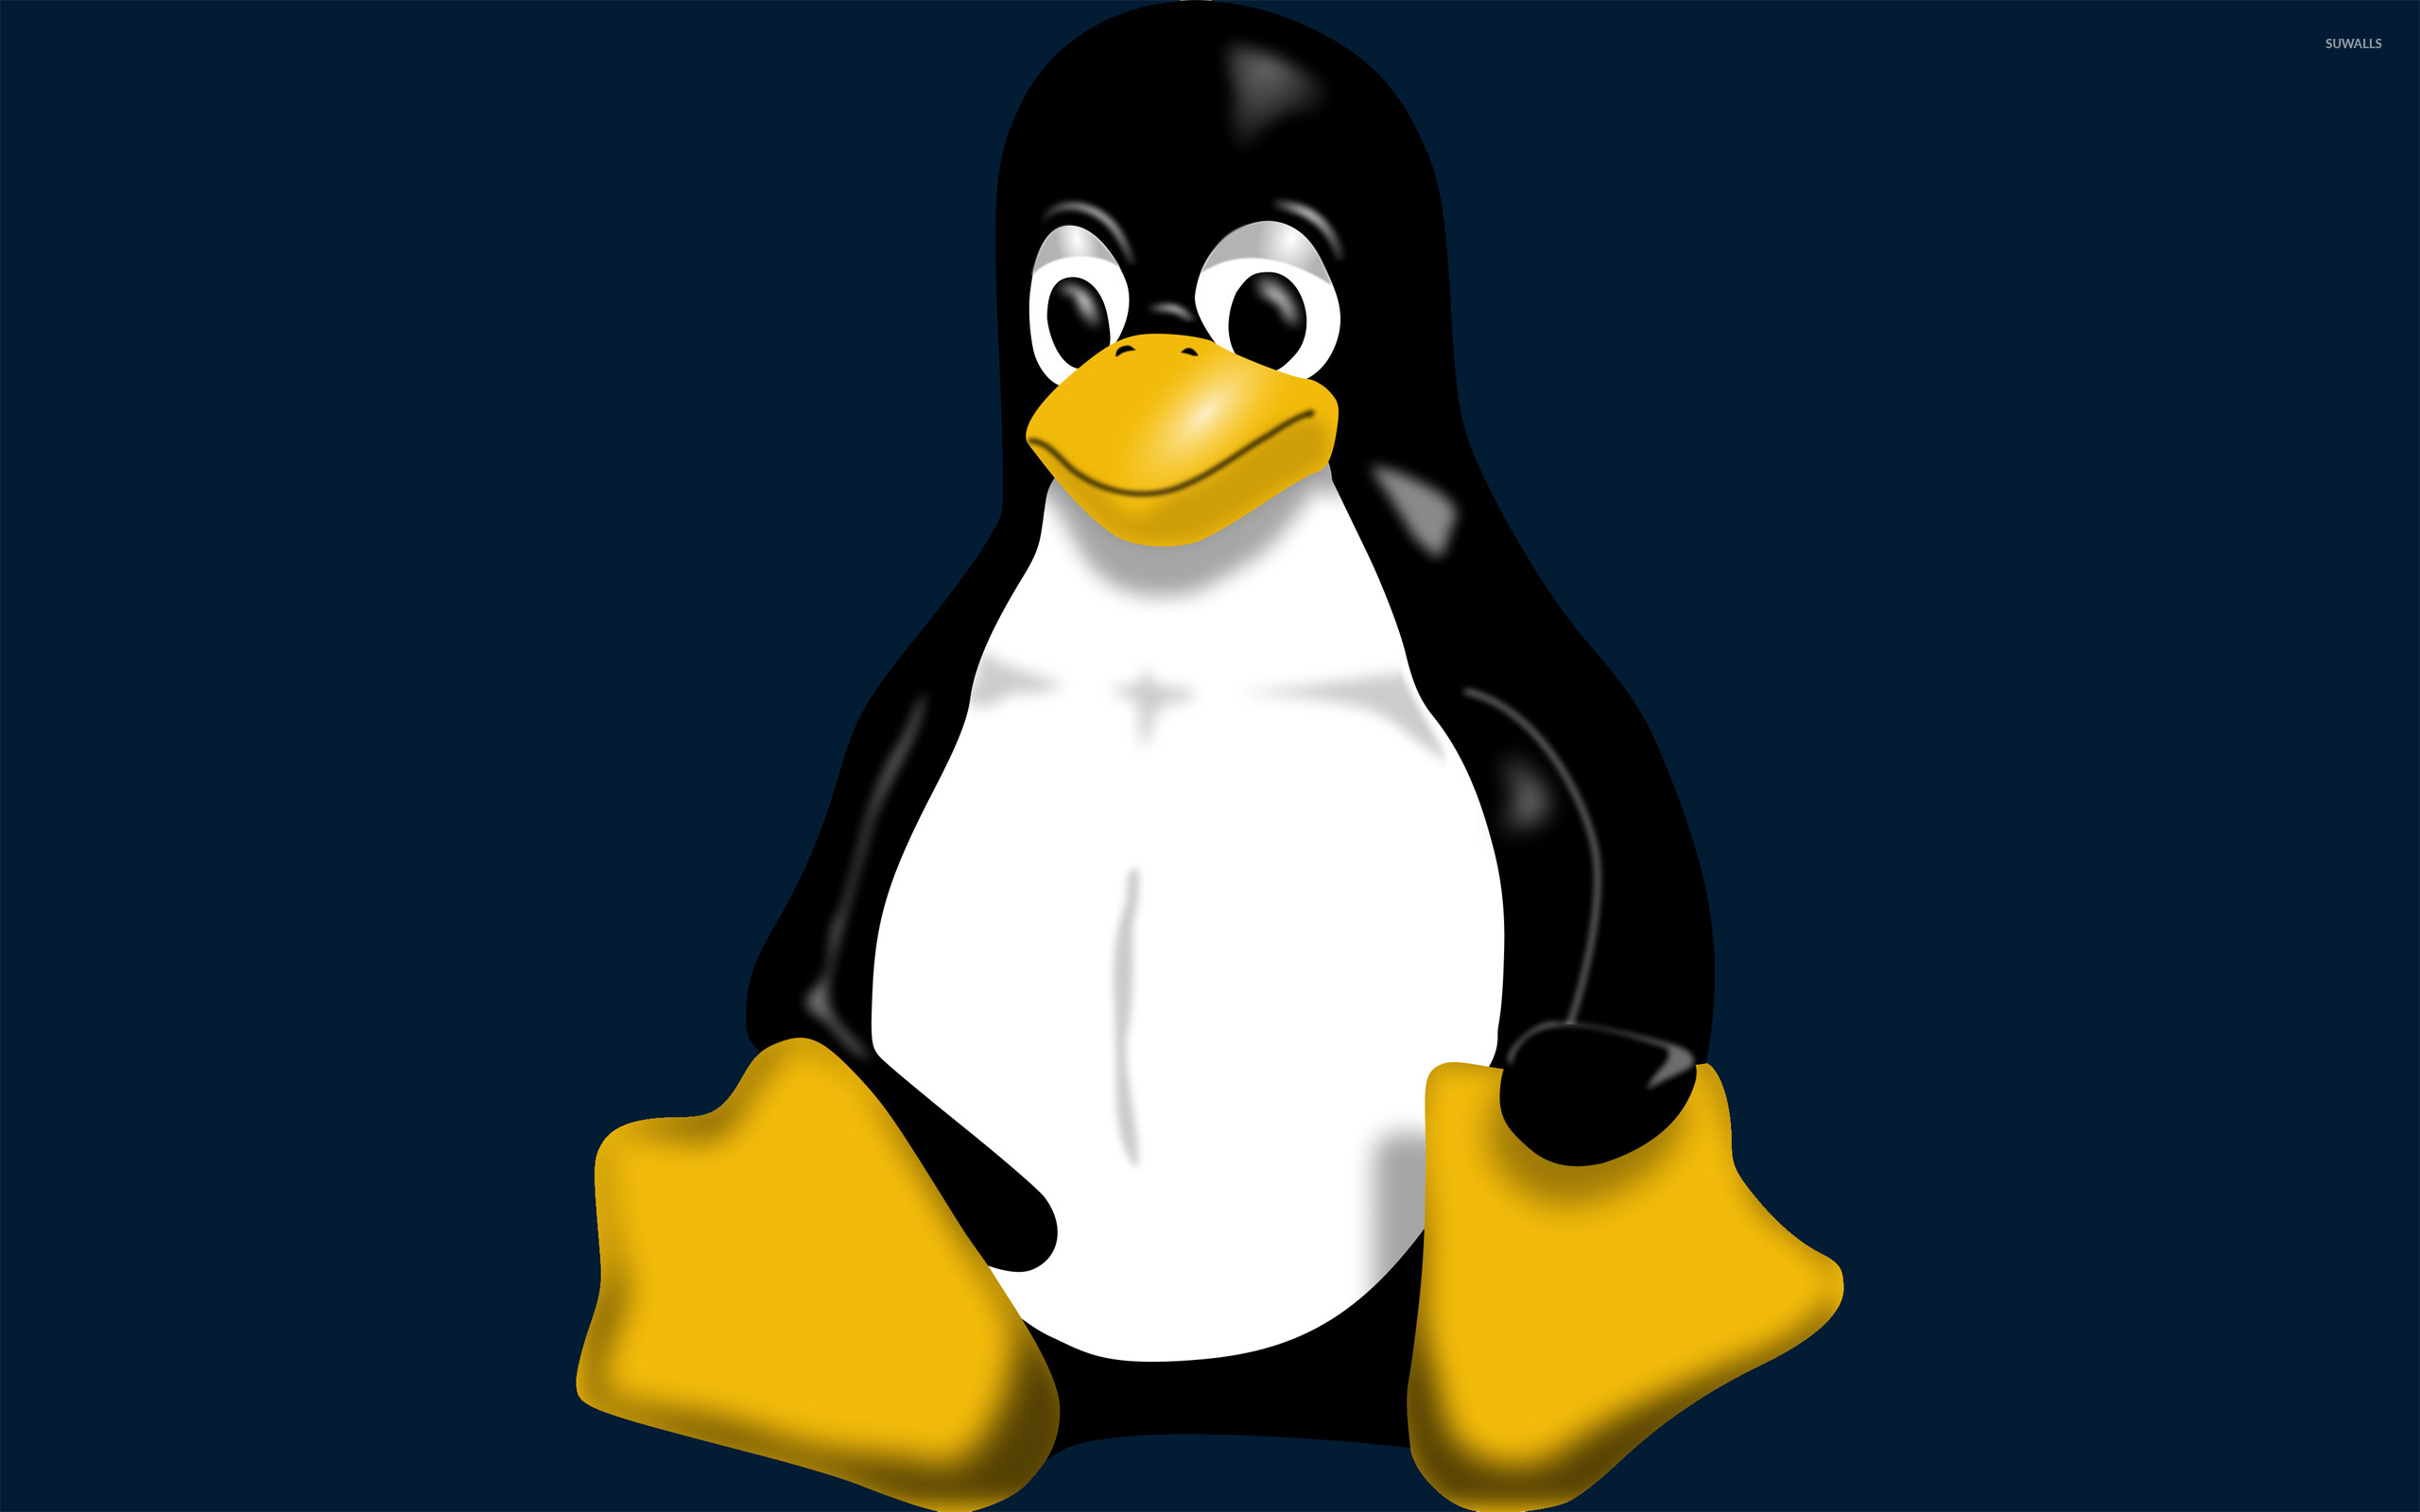 Bmp picture. Изображения с расширением bmp. Рисунки с расширением bmp. Файлы с расширением bmp. Пингвин линукс.